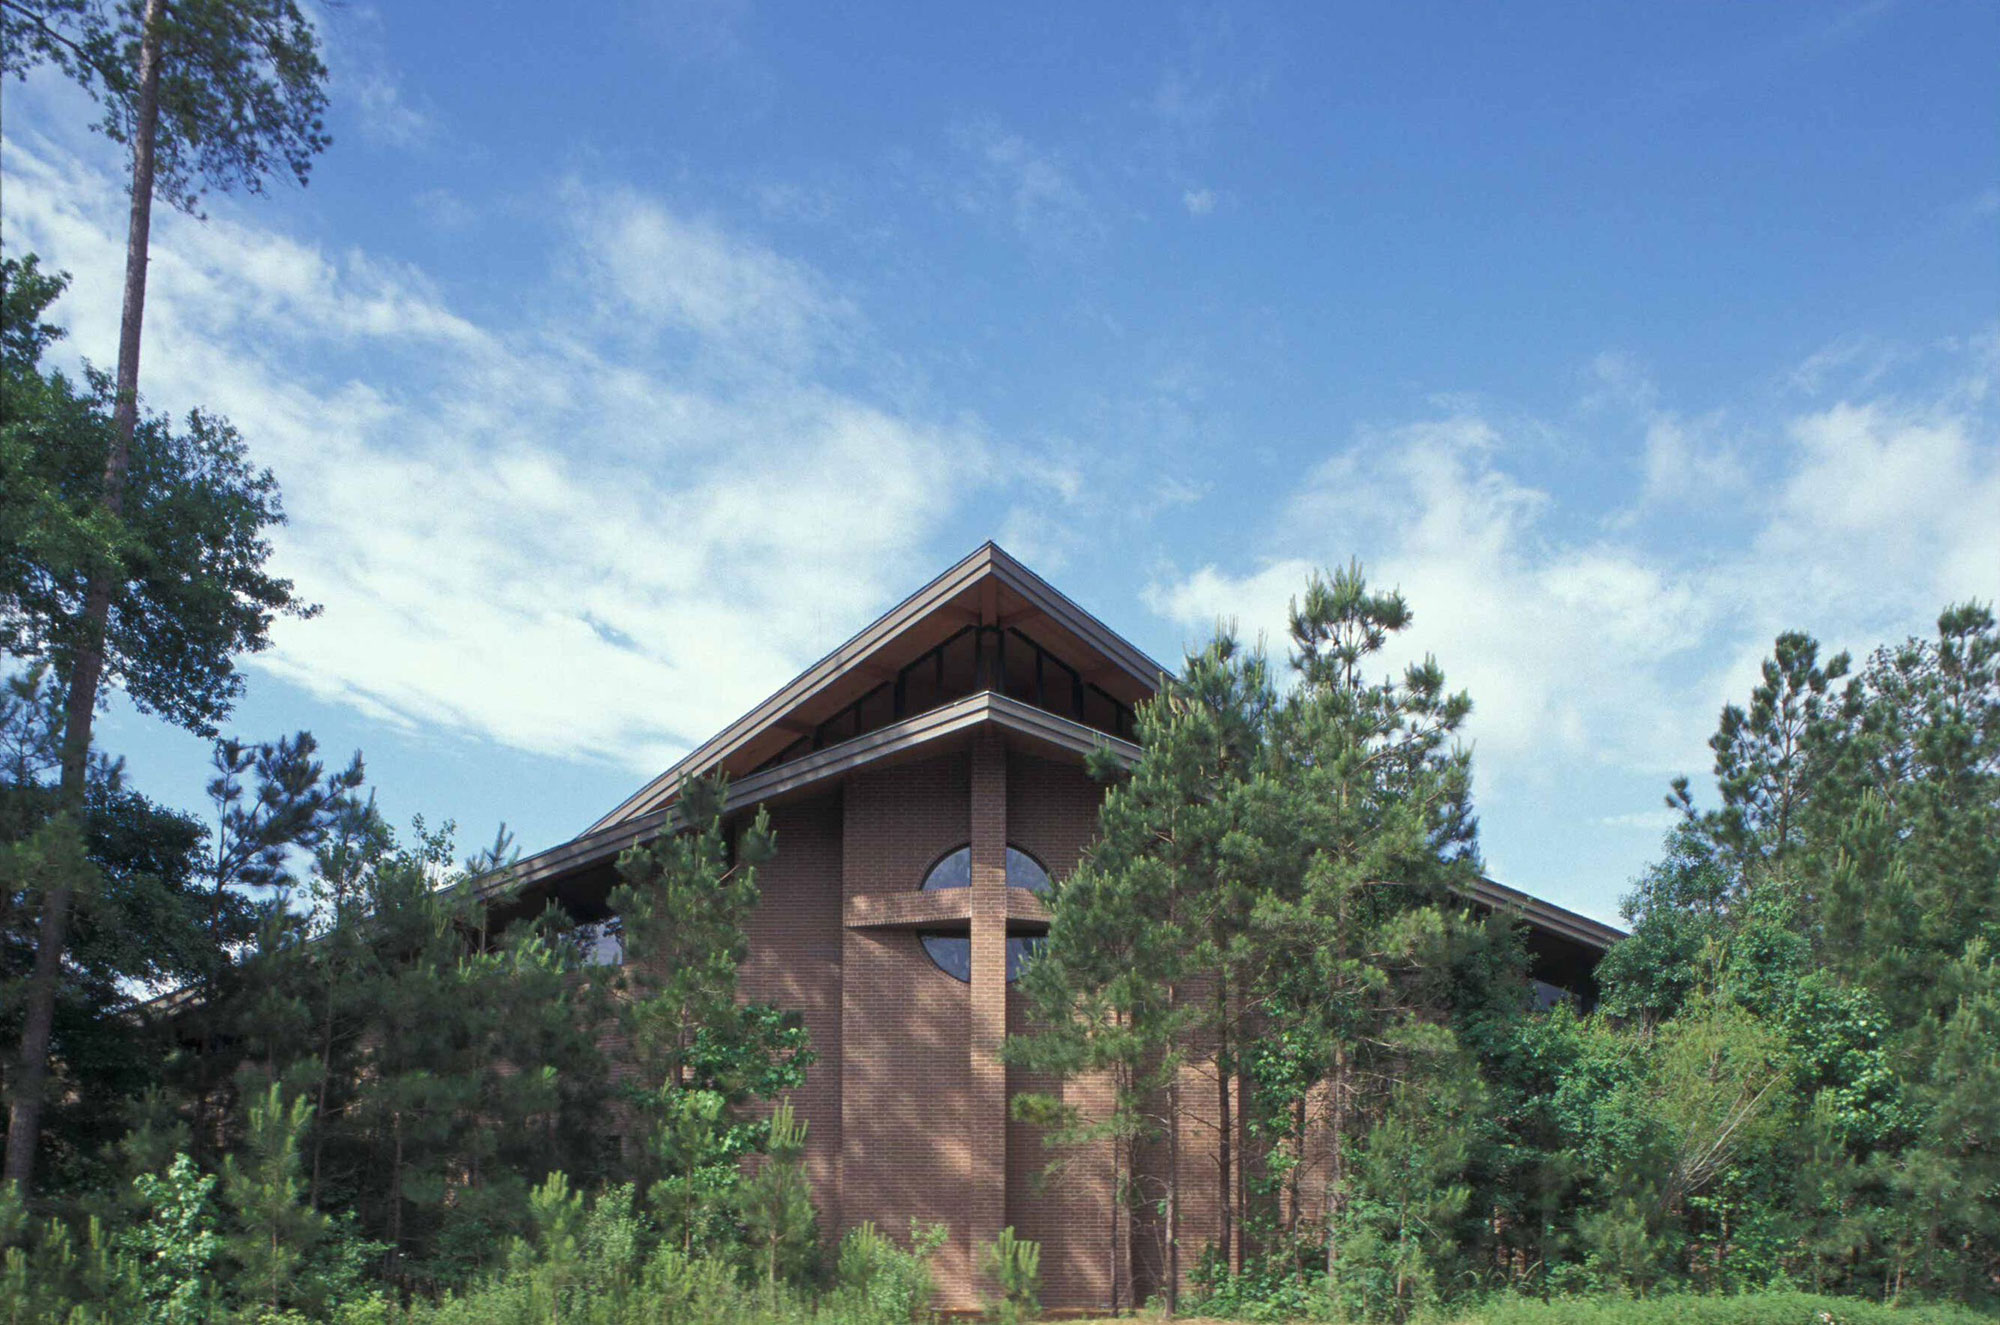 Woodlands Community Presbyterian Church, The Woodlands